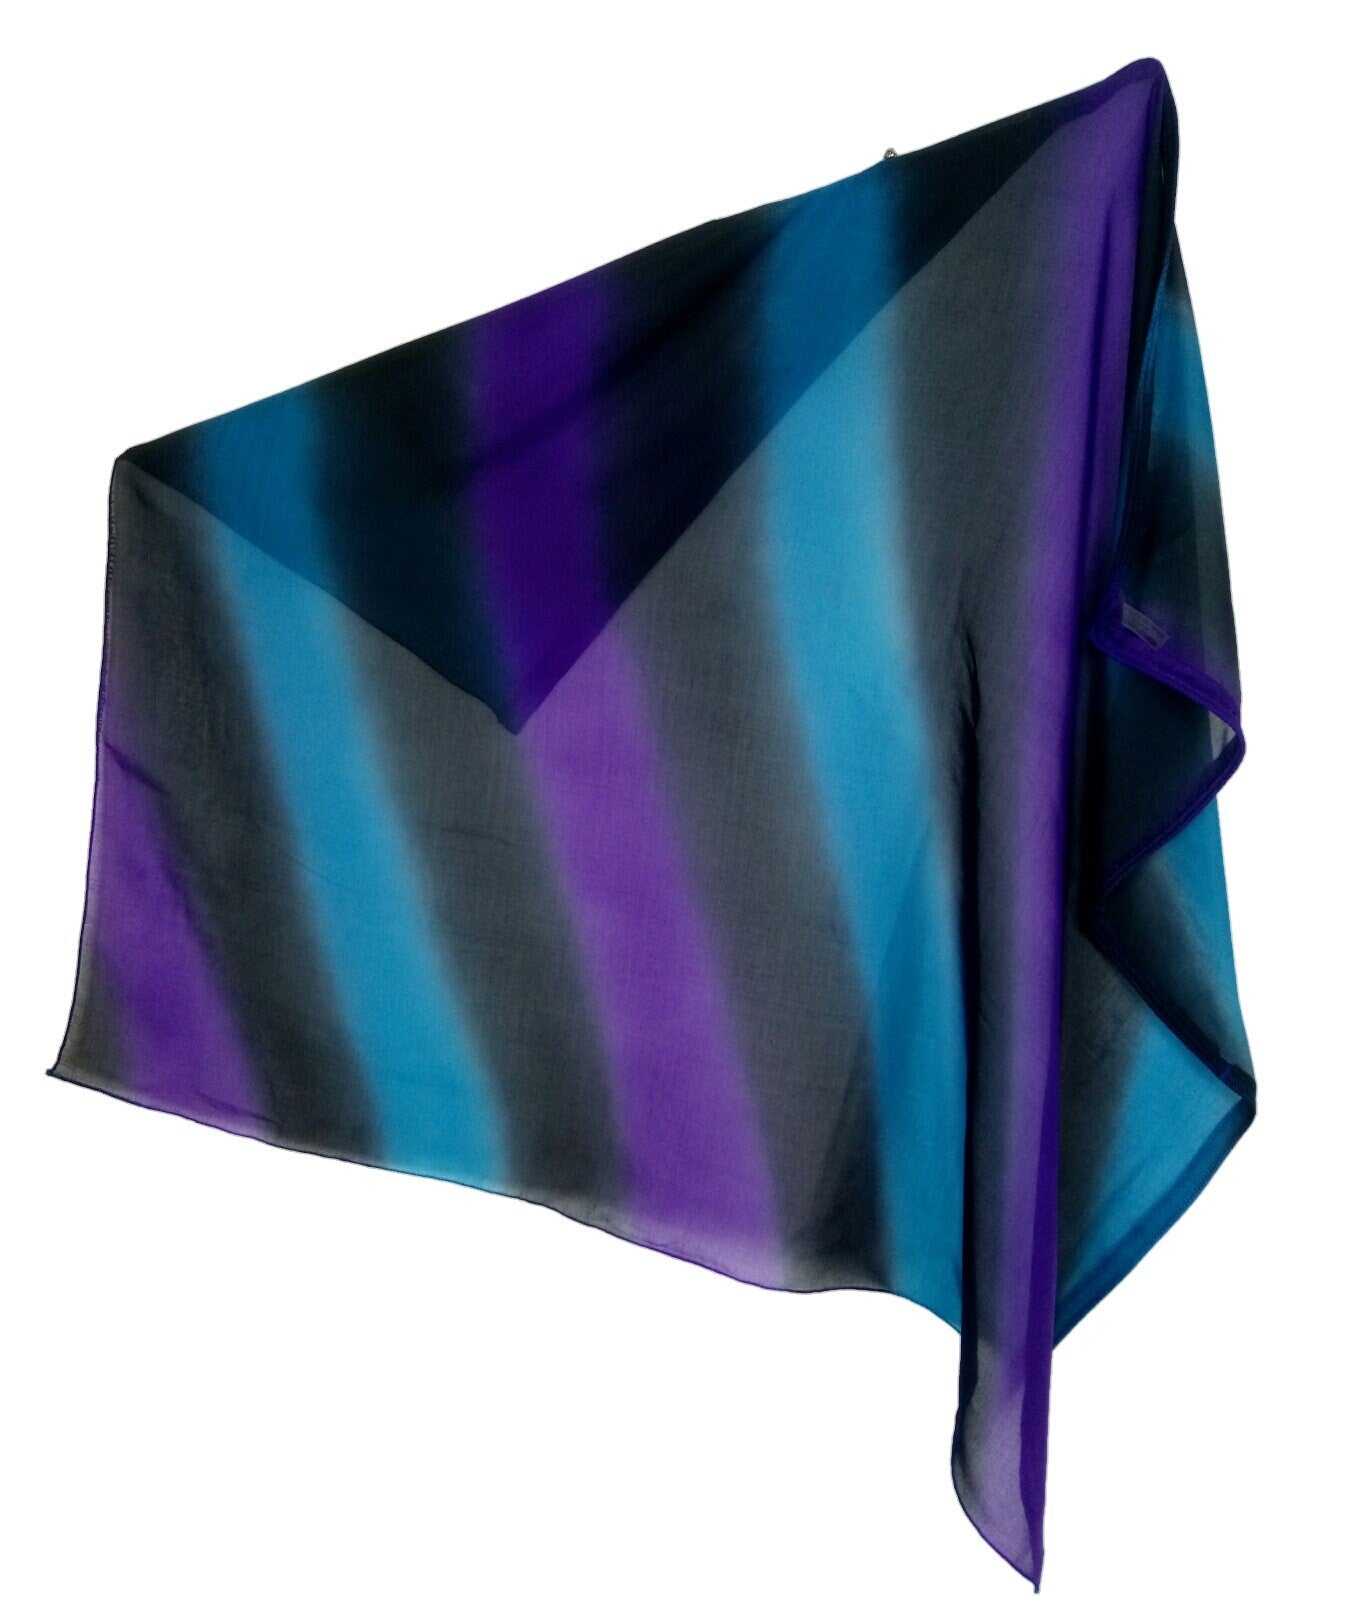 Multi-Color Swing Flag M-size - Compre 1 y obtenga 1 gratis